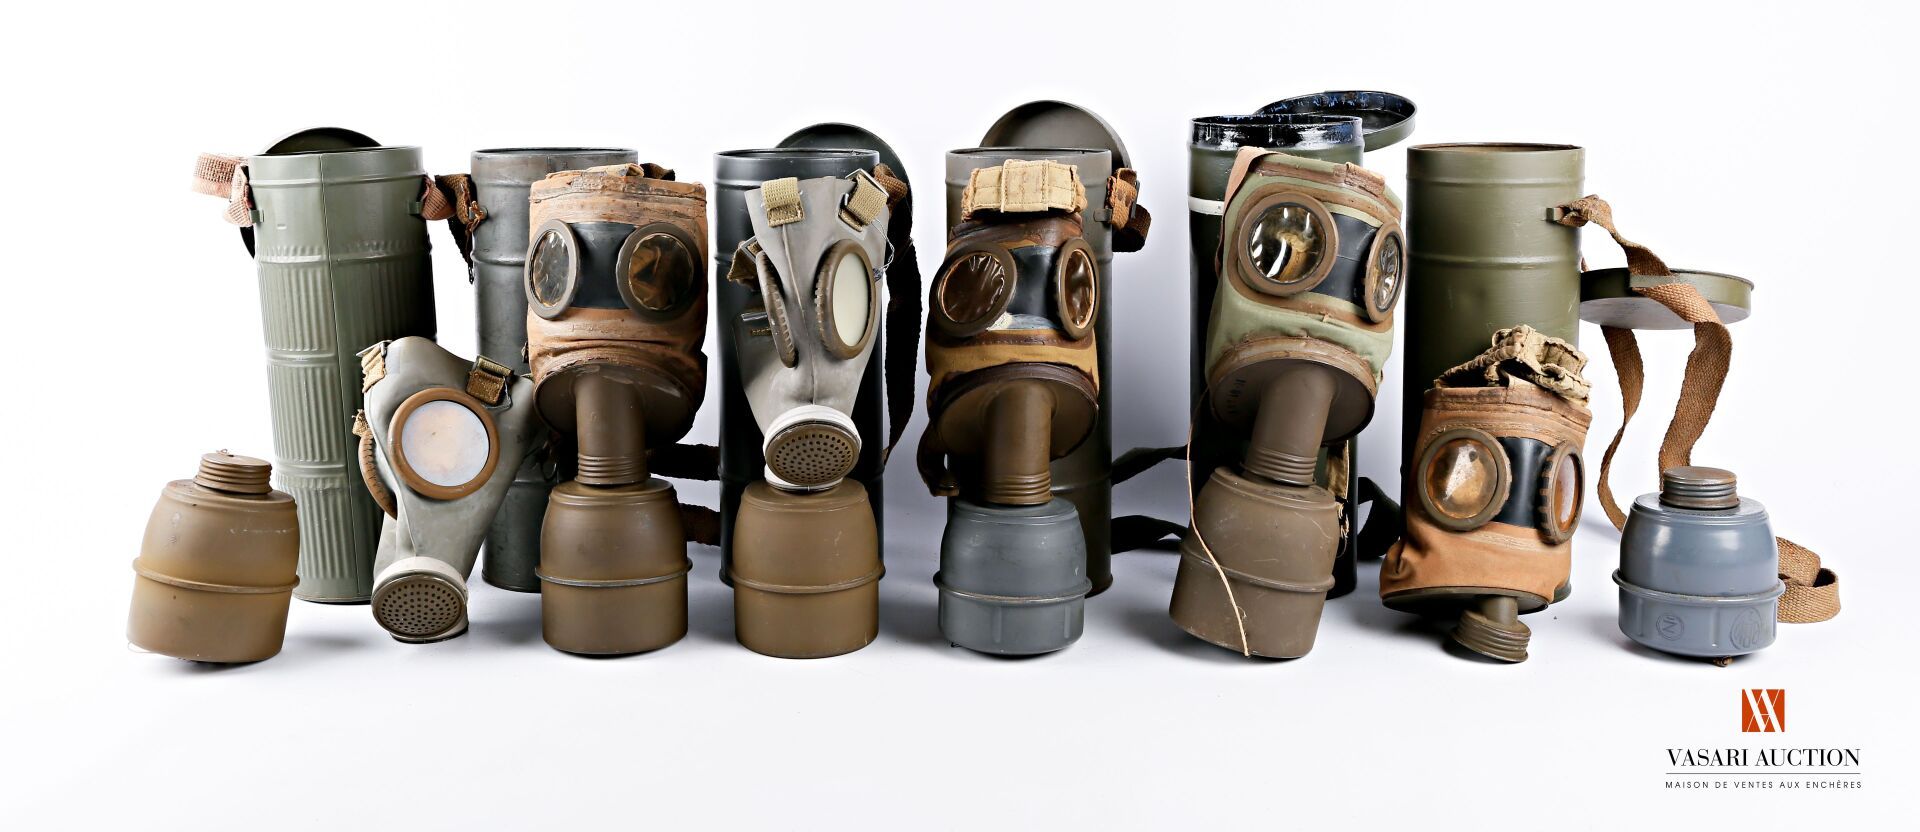 Null 被动防御：运输集装箱中的六个普通防护装置（防毒面具），法国，二战时期，整个